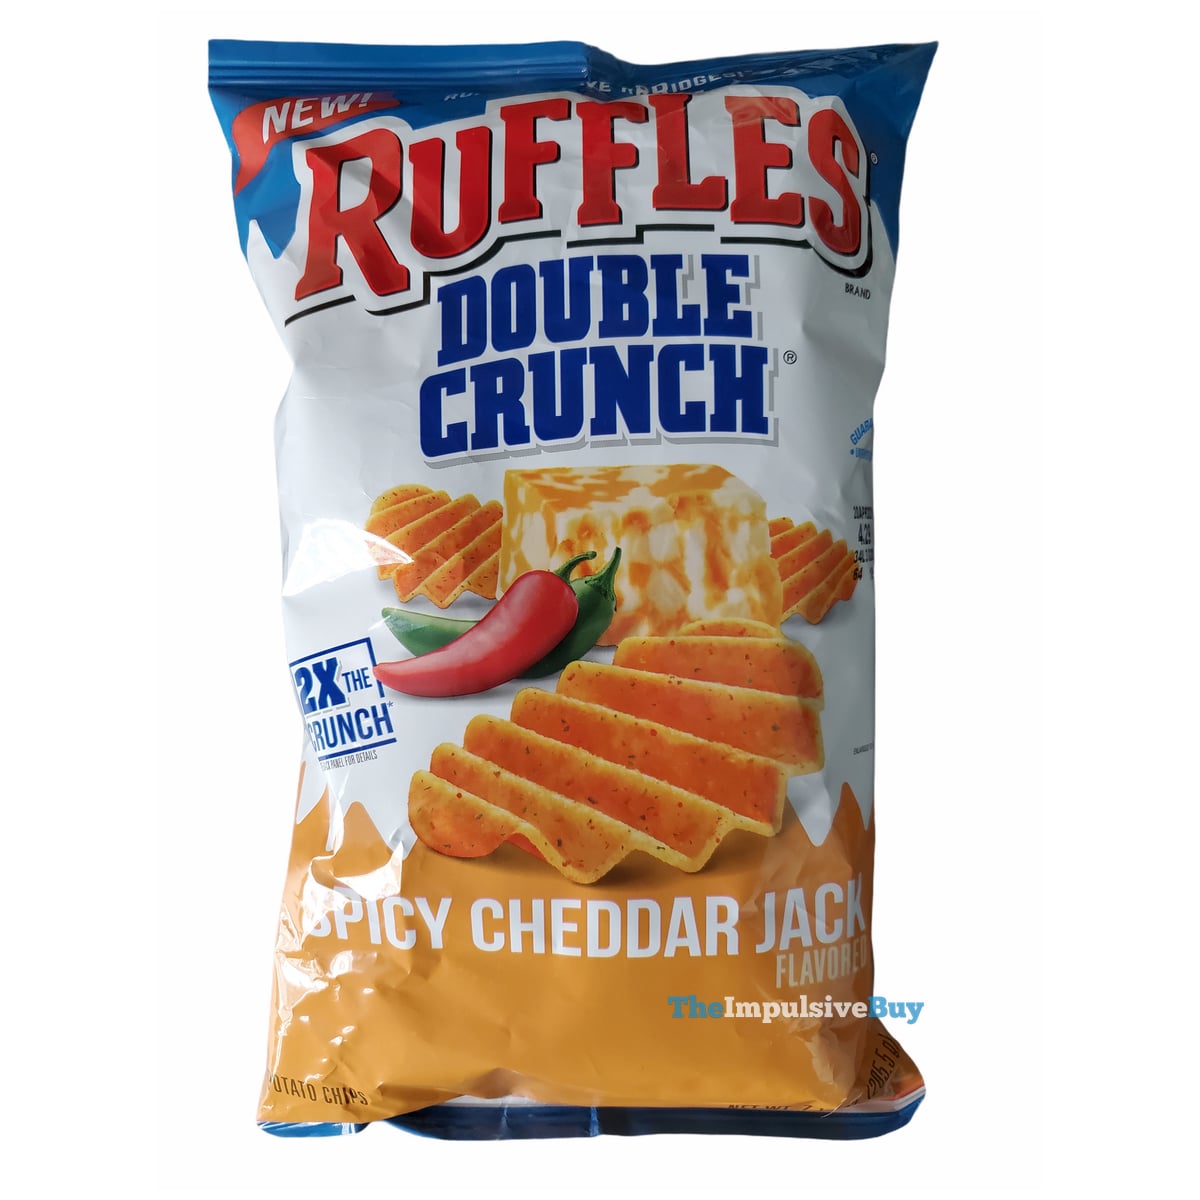 Ruffles-Double-Crunch-Spicy-Cheddar-Jack-Potato-Chips-Bag.jpeg